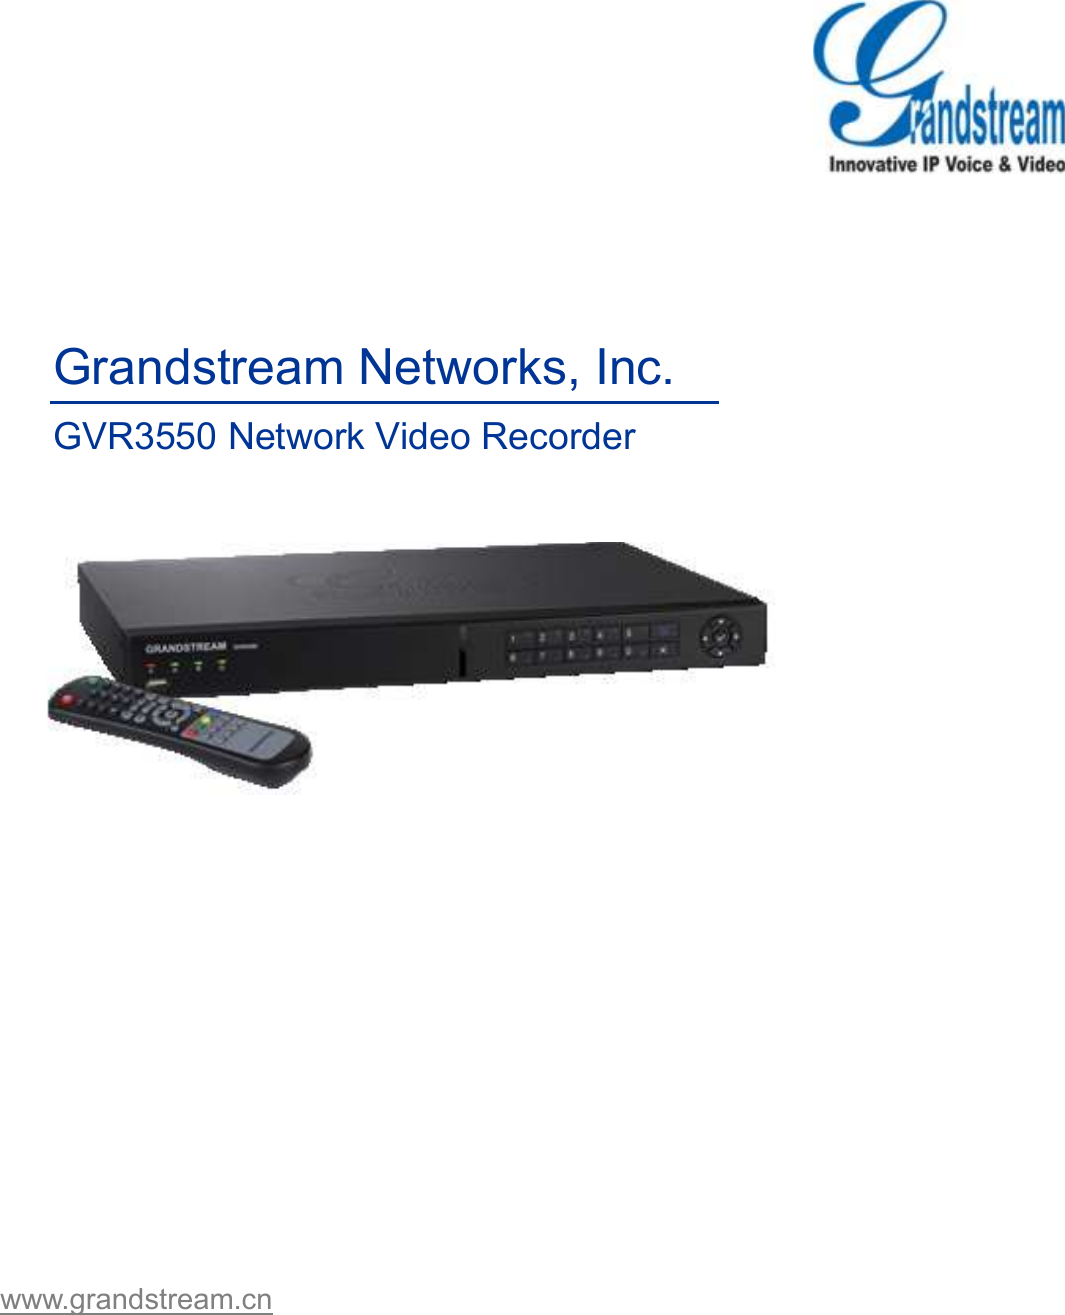   www.grandstream.cn Grandstream Networks, Inc. GVR3550 Network Video Recorder  